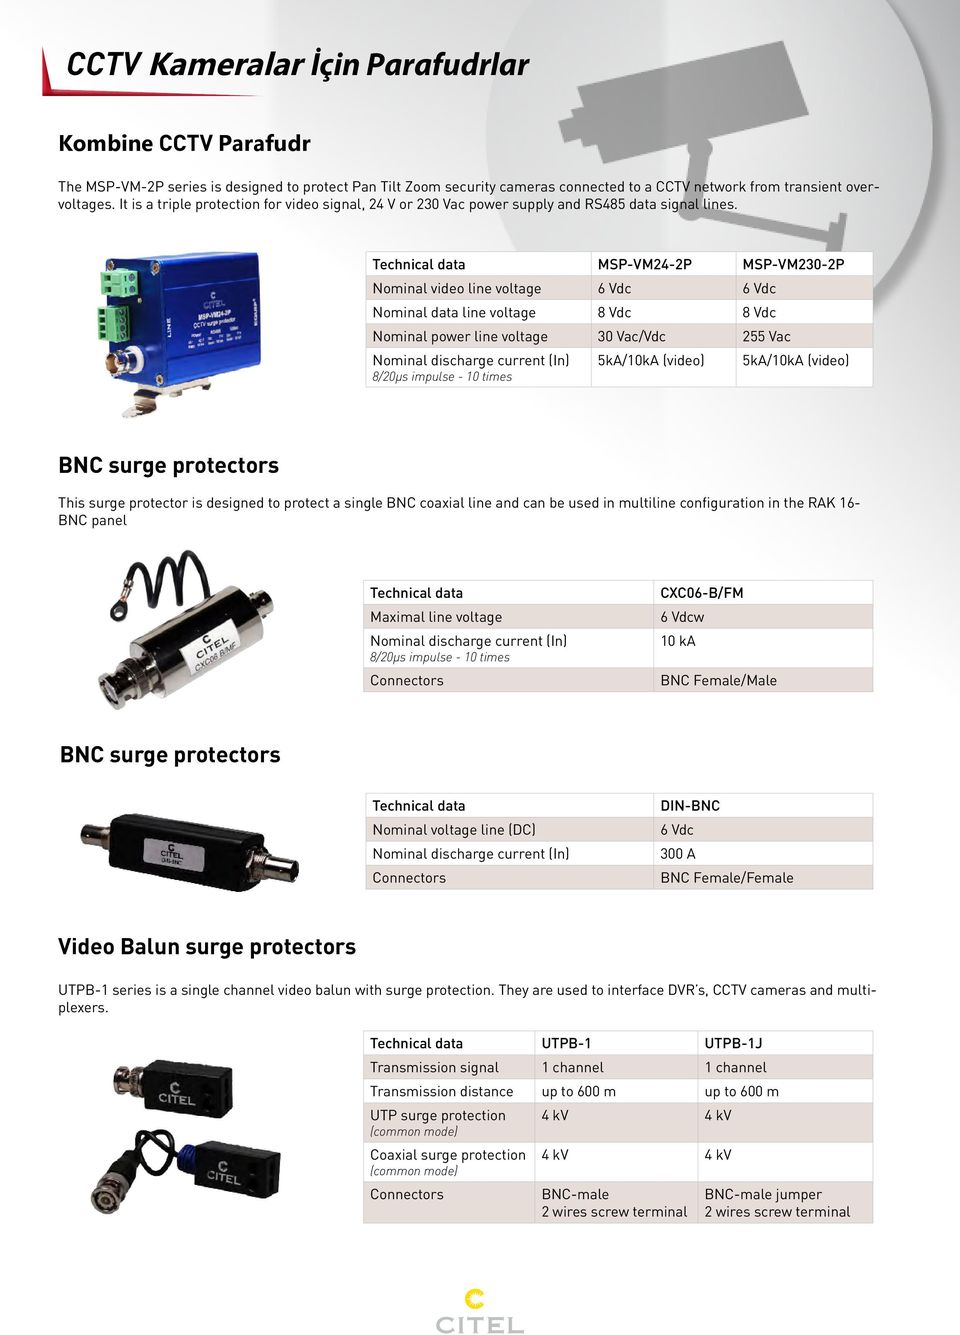 Technical data MSP-VM24-2P MSP-VM230-2P Nominal video line voltage 6 Vdc 6 Vdc Nominal data line voltage 8 Vdc 8 Vdc Nominal power line voltage 30 Vac/Vdc 255 Vac 8/20 µs impulse - 10 times 5kA/10kA